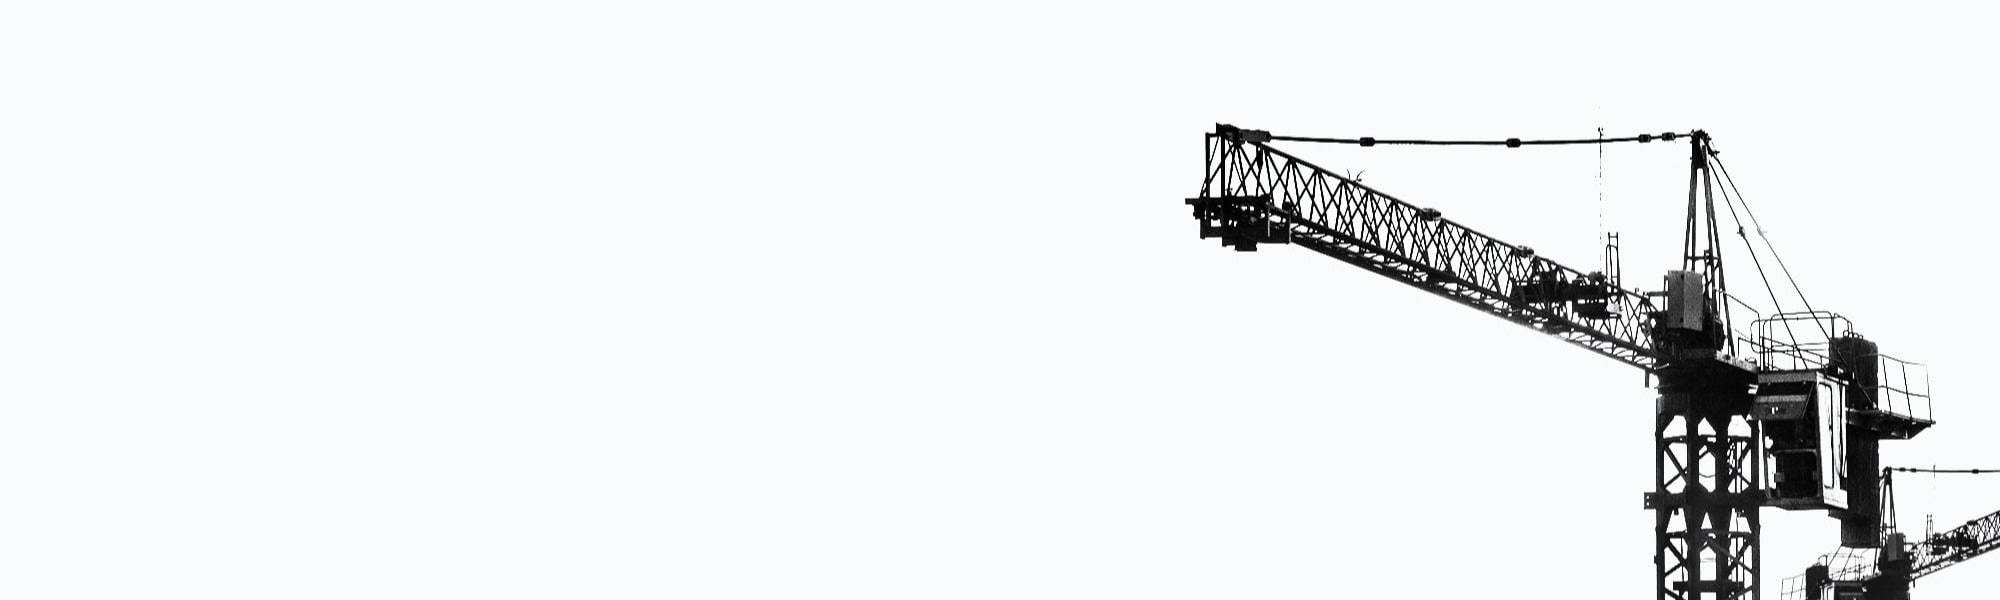 Banner image of crane 